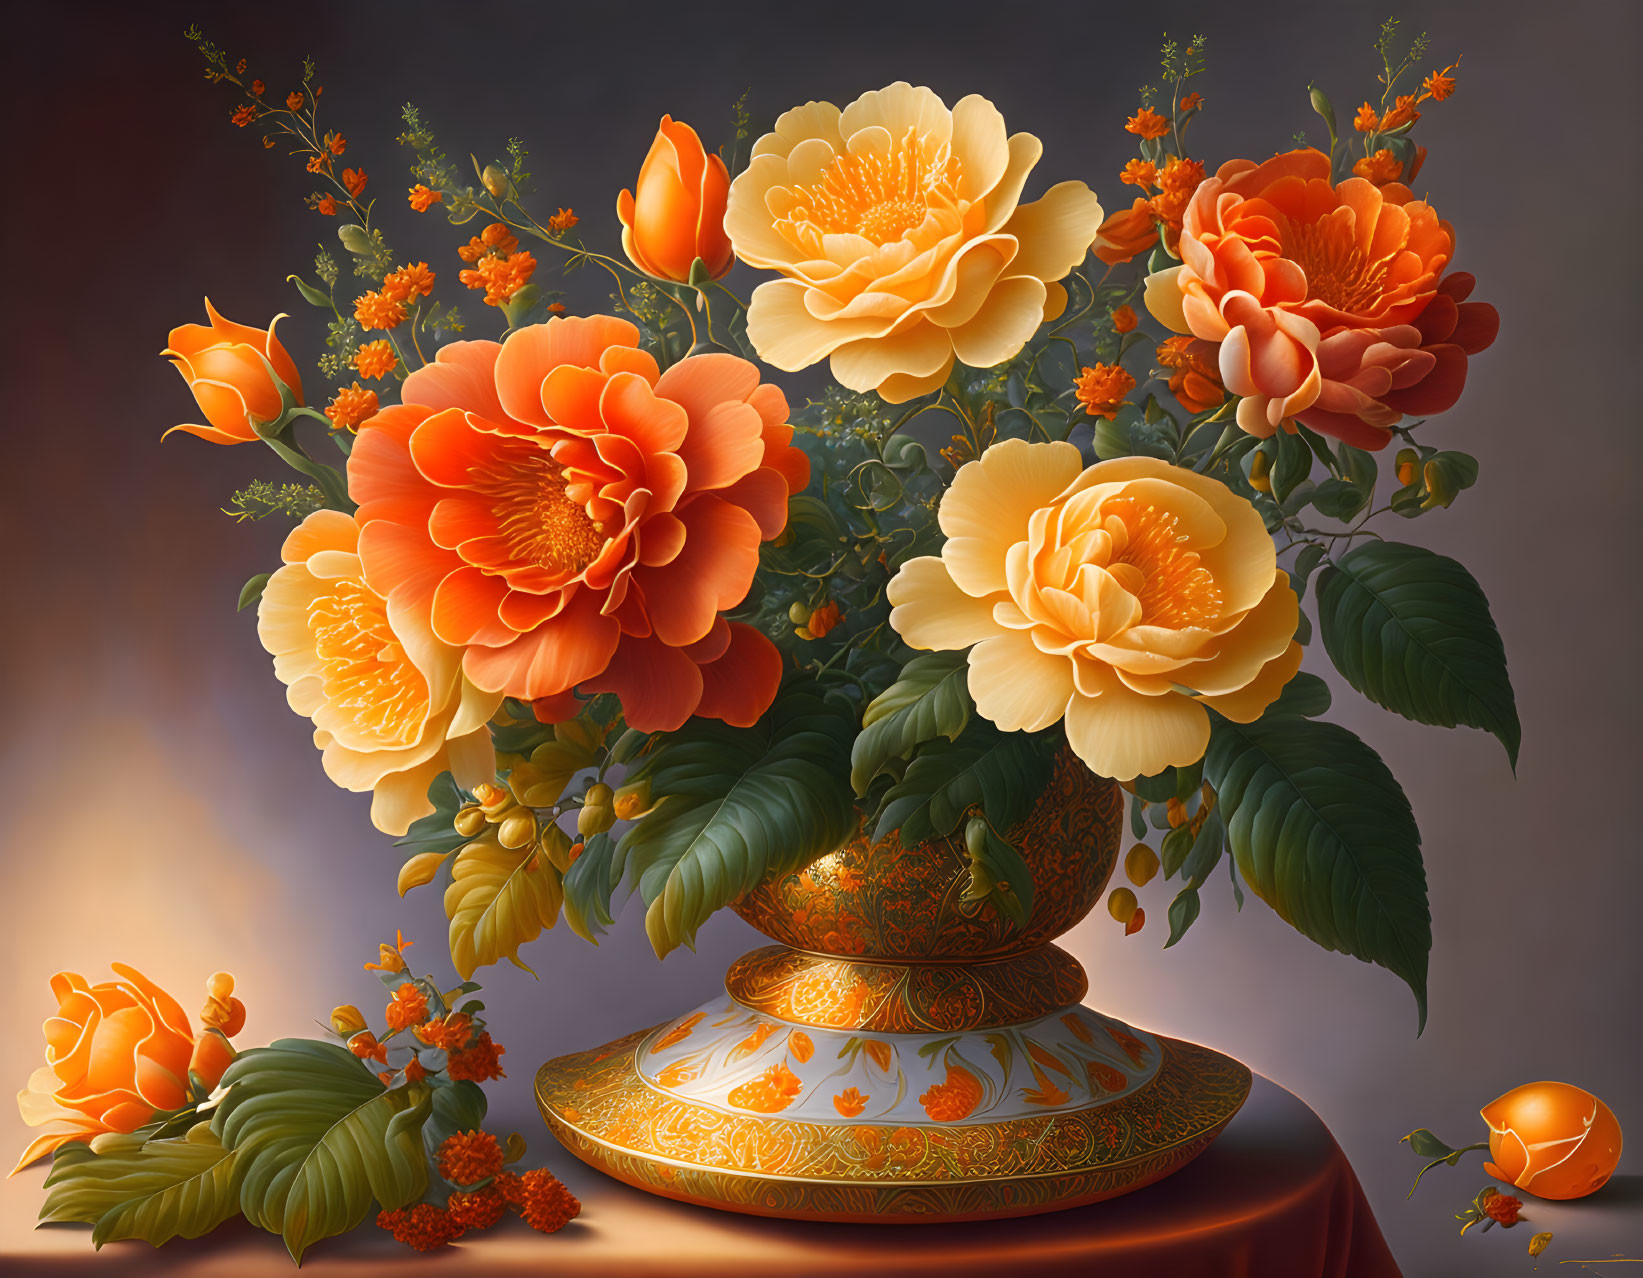 Orange flowers in a vase